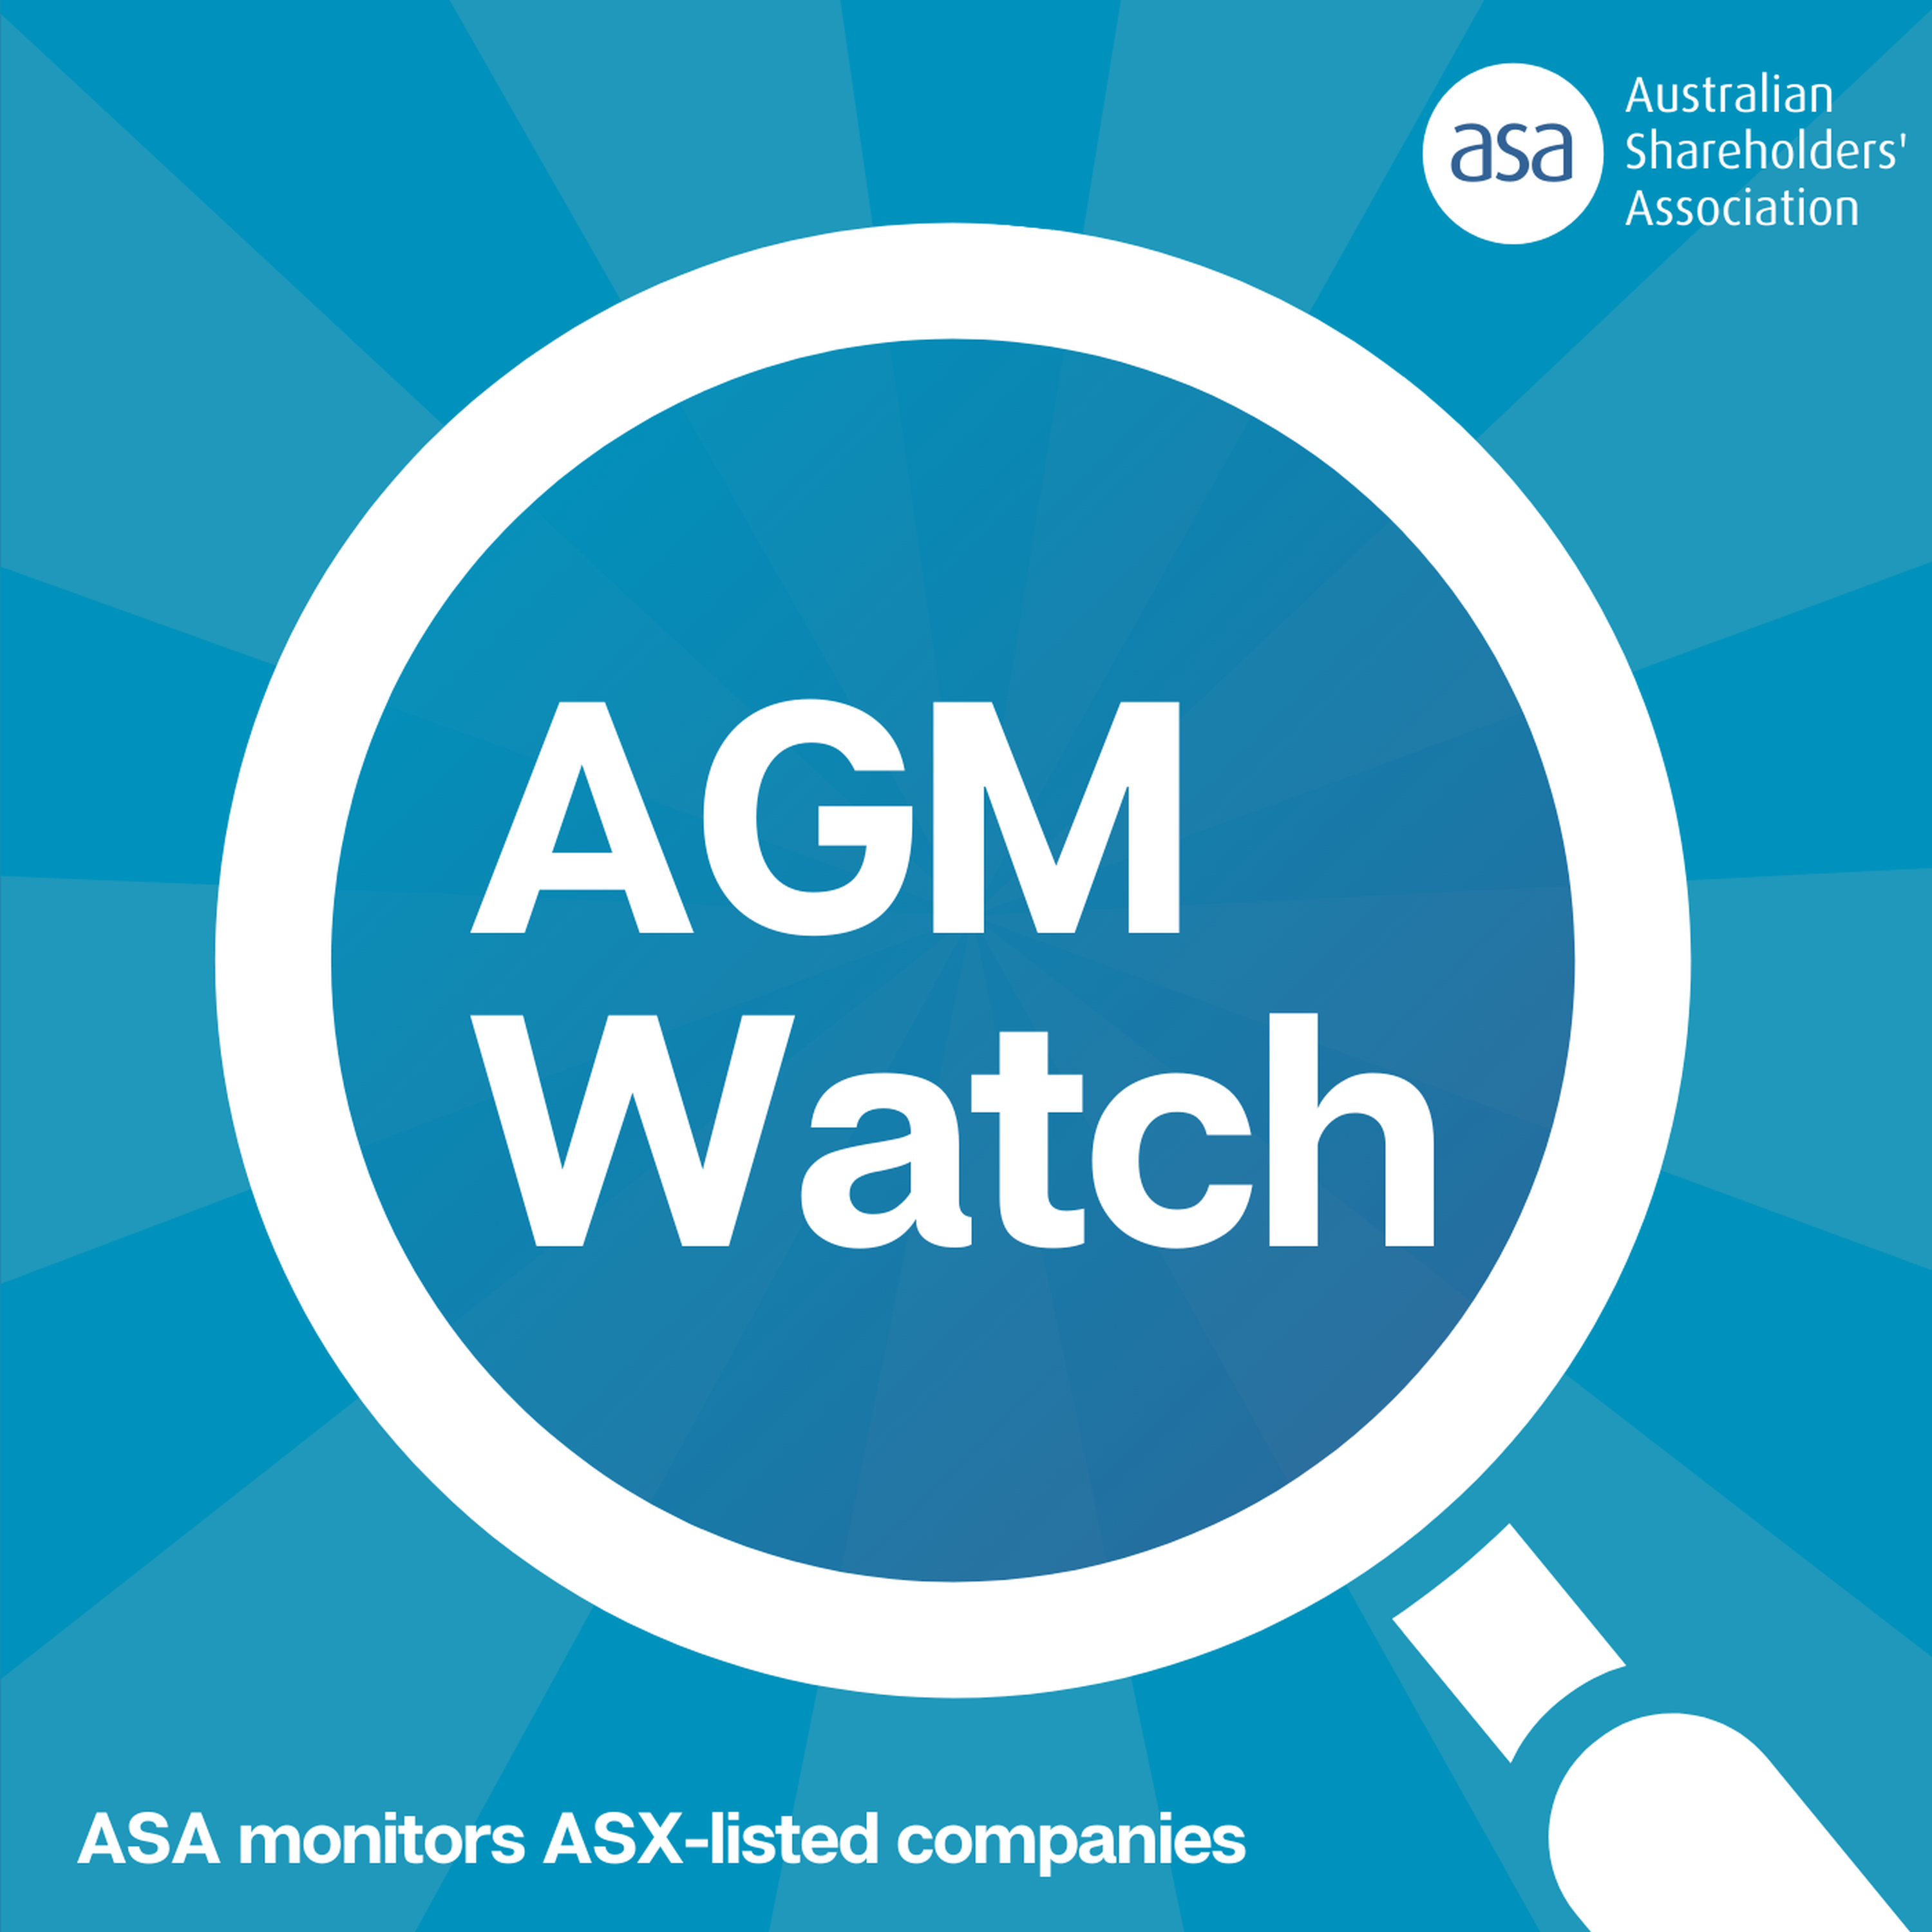 AGM Watch - Transurban